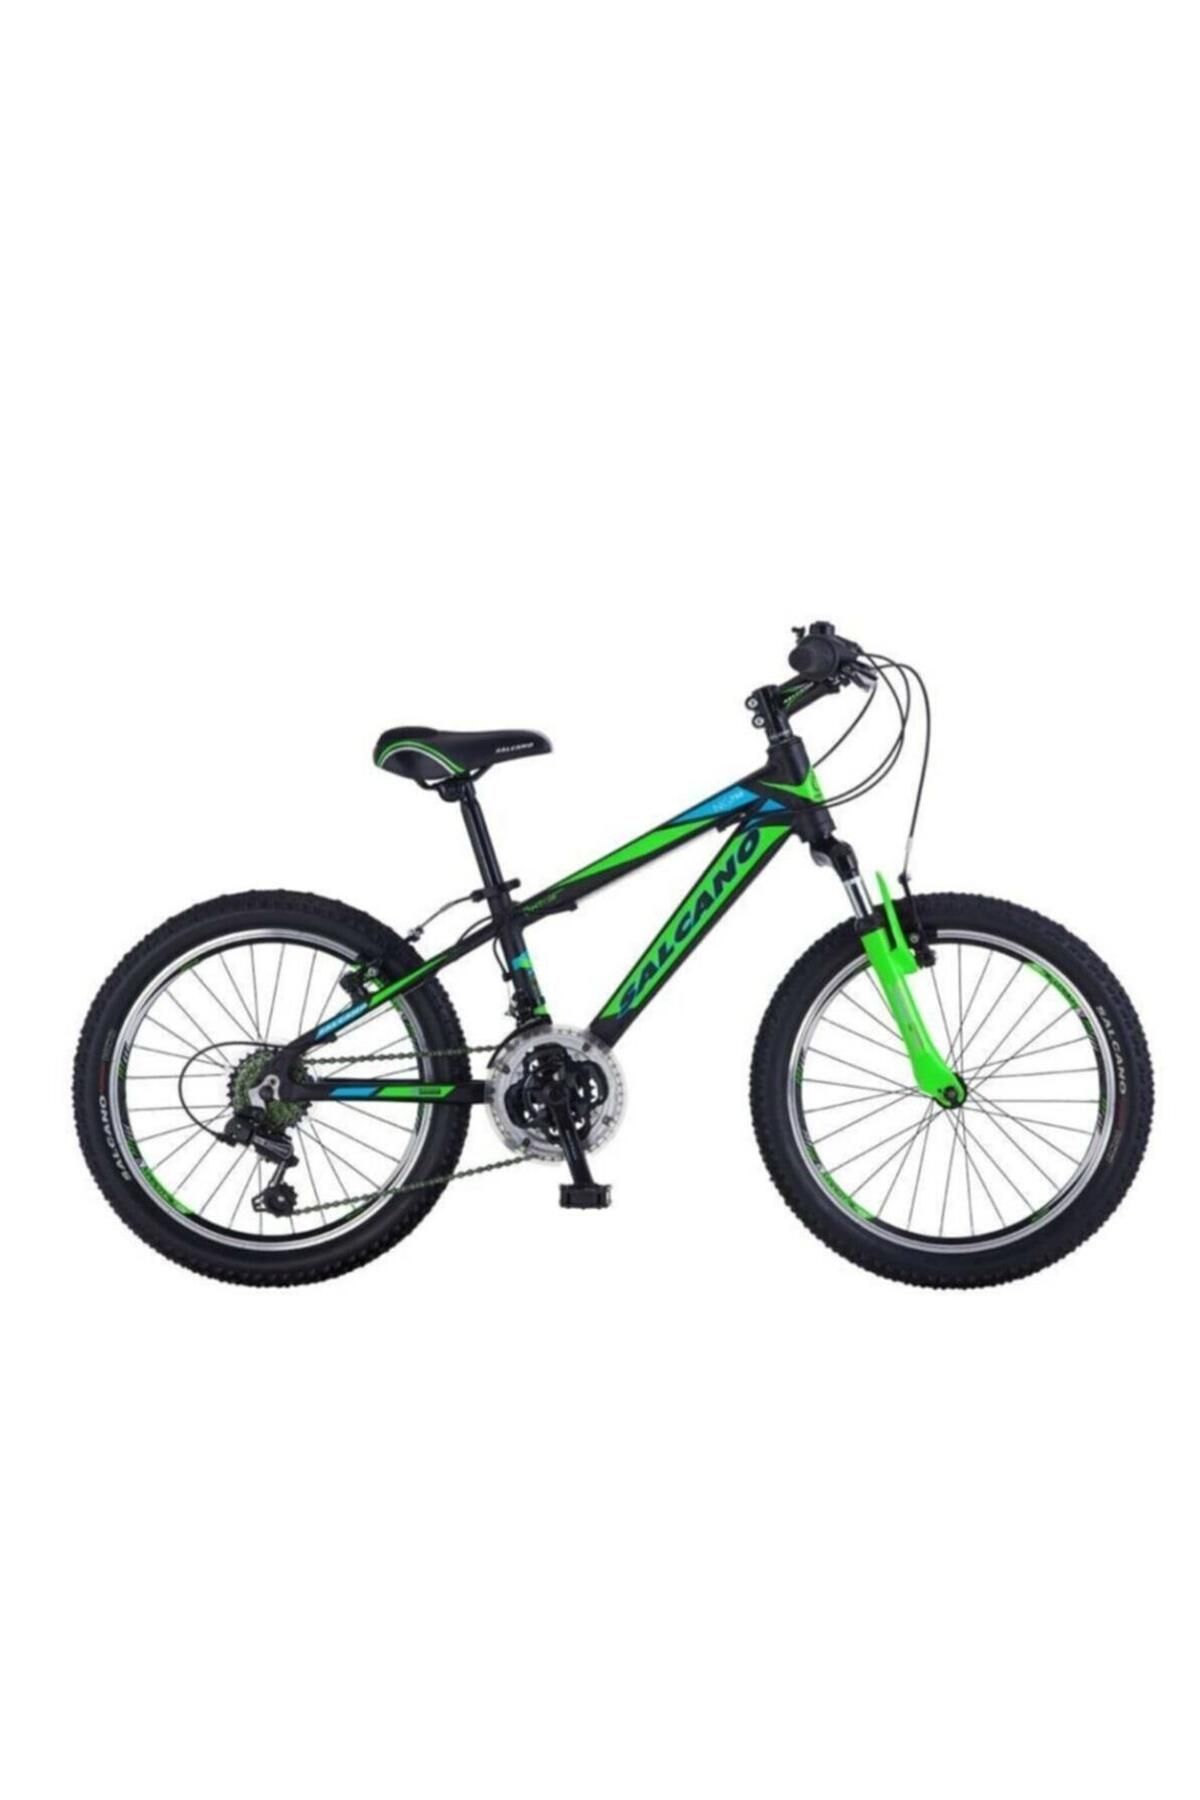 Salcano NG750 20" Jant 18 Vites Alüminyum Gövde Çocuk Bisikleti Siyah Yeşil Turkuaz